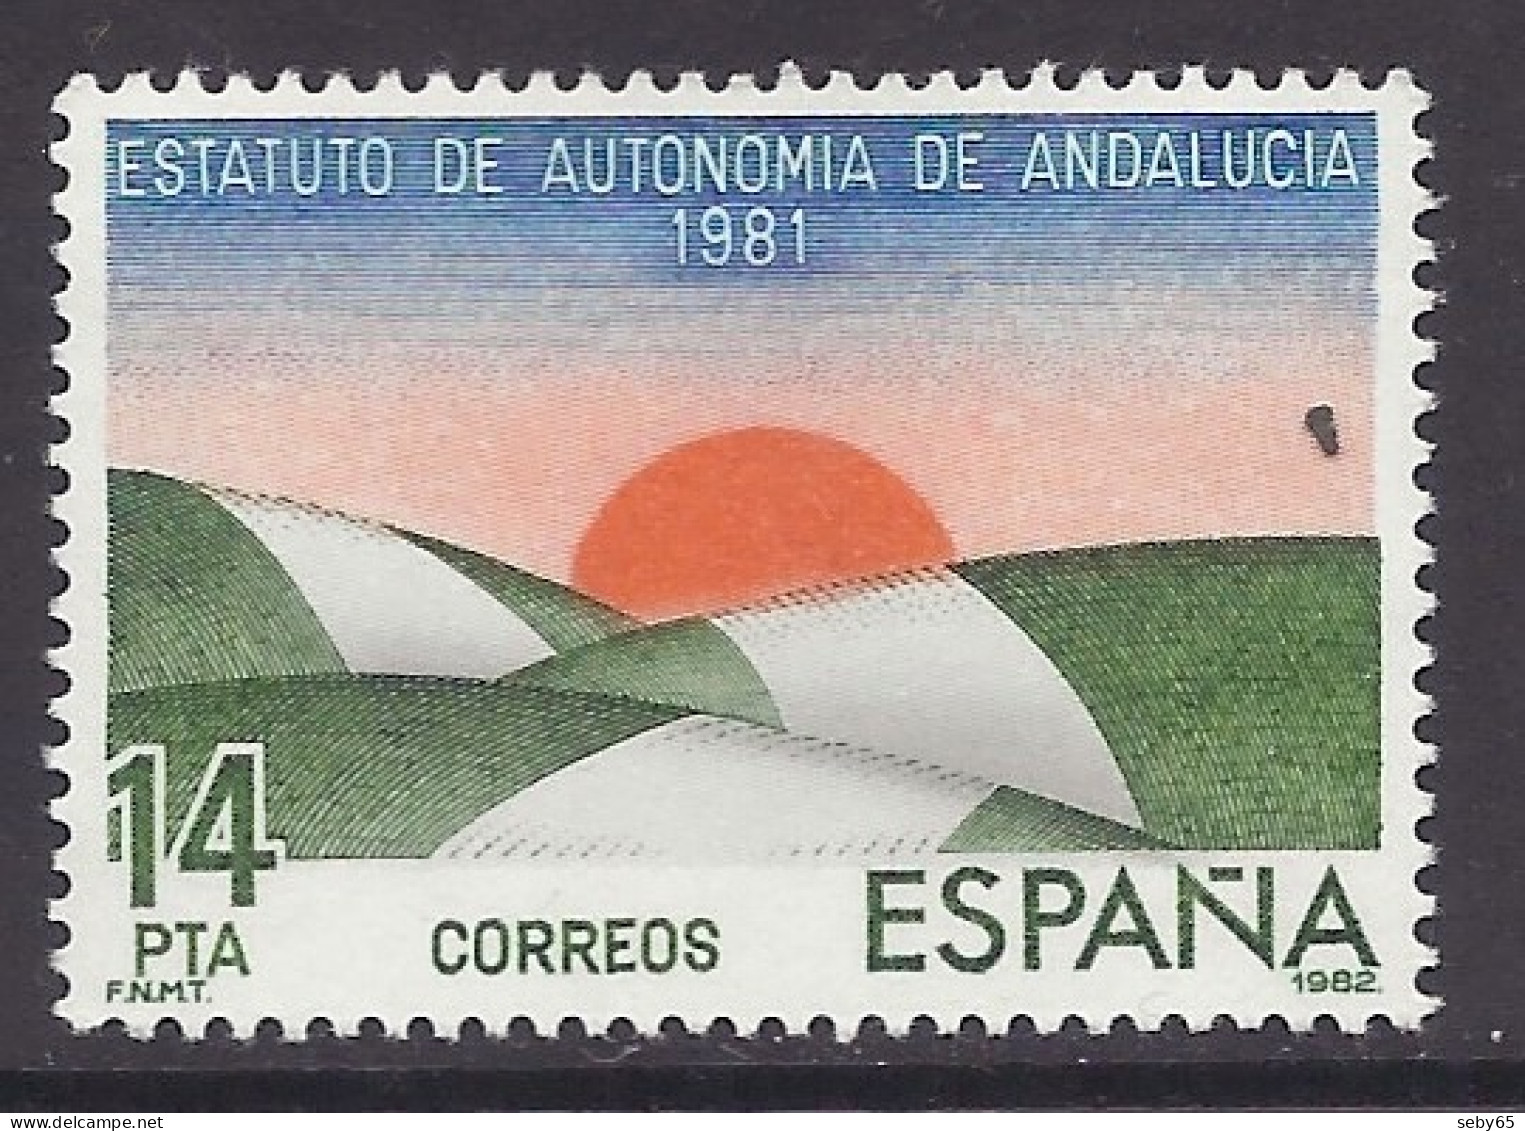 Spain 1983 - Estatutos De Autonomías, Region De Andalucia, Andalusia, Sun Sunrise, Emblem - MNH - Ungebraucht